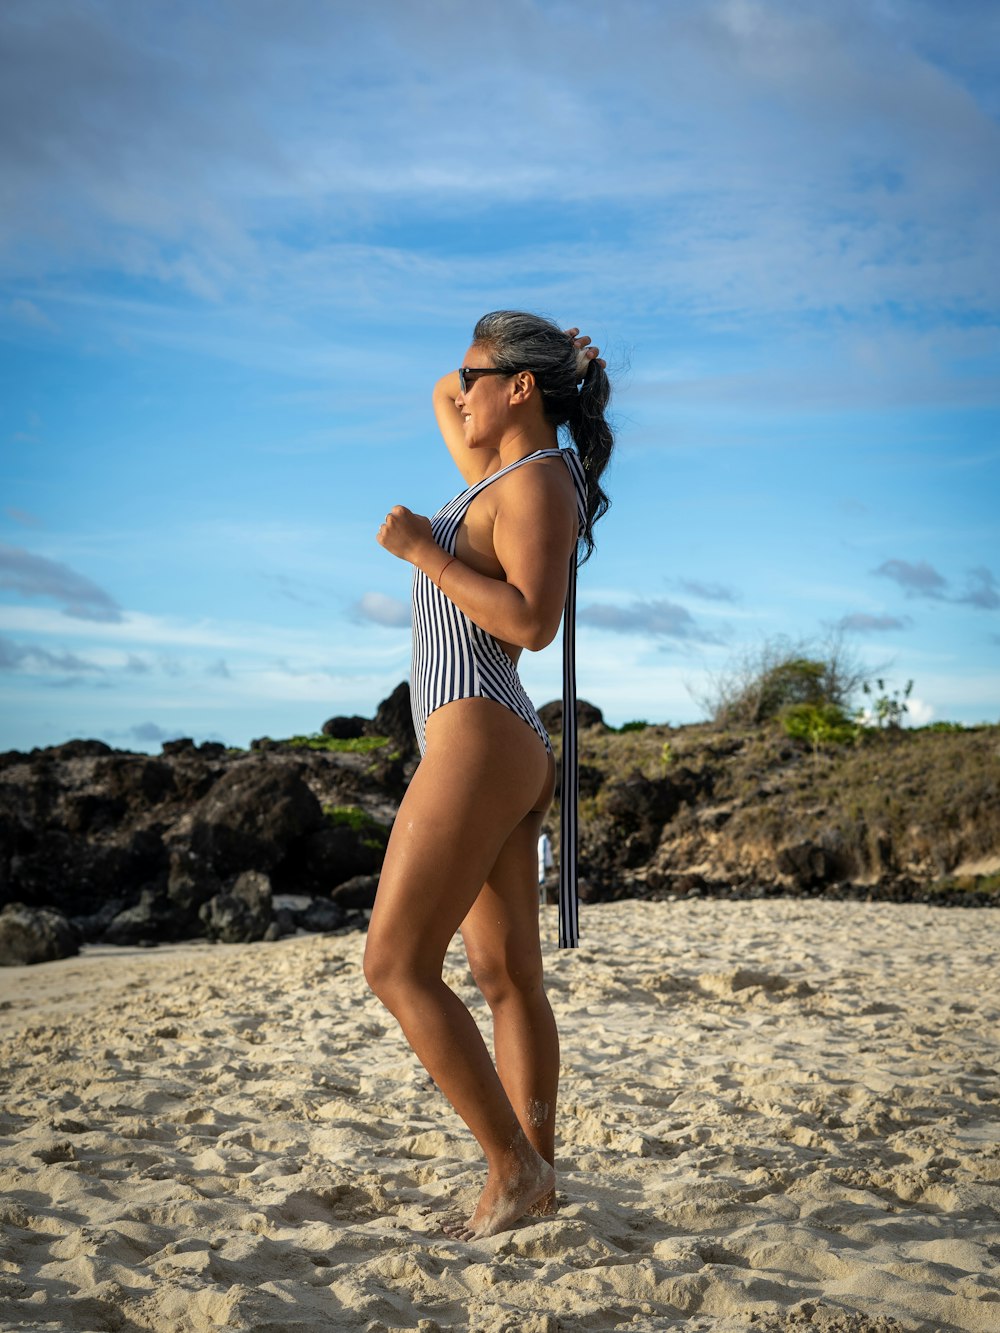 woman in white and black stripe bikini standing on beach during daytime